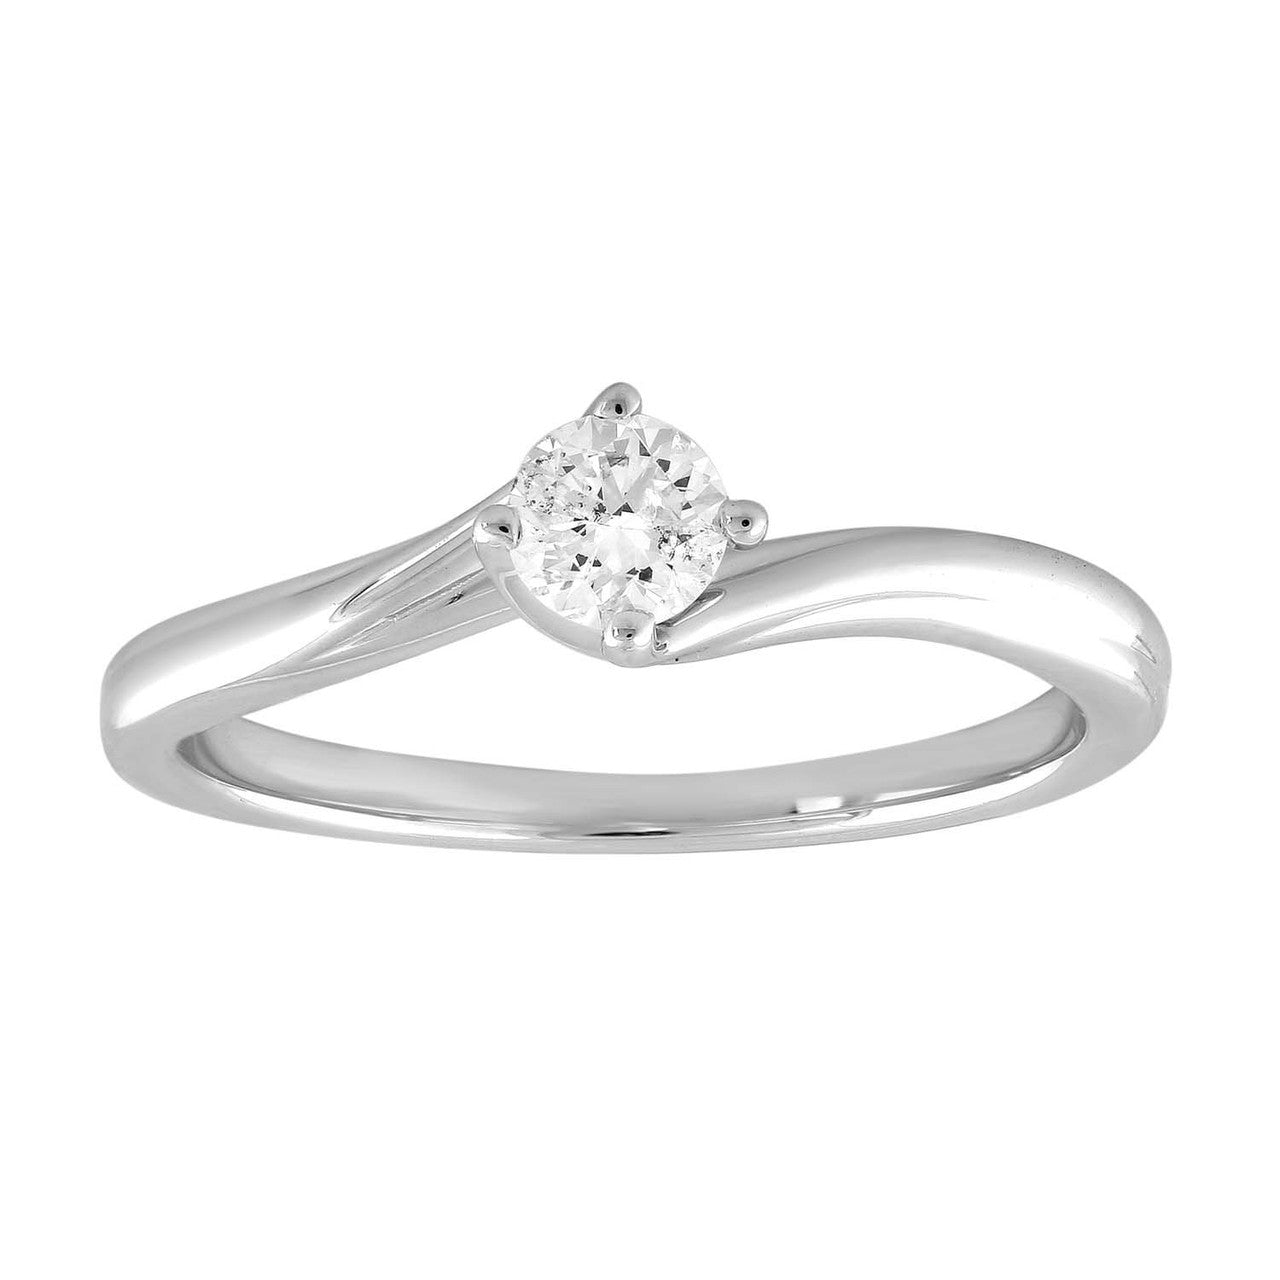 Ice Jewellery Solitaire Ring with 0.25ct Diamond in 9K White Gold -  IGR-37388-020-W | Ice Jewellery Australia